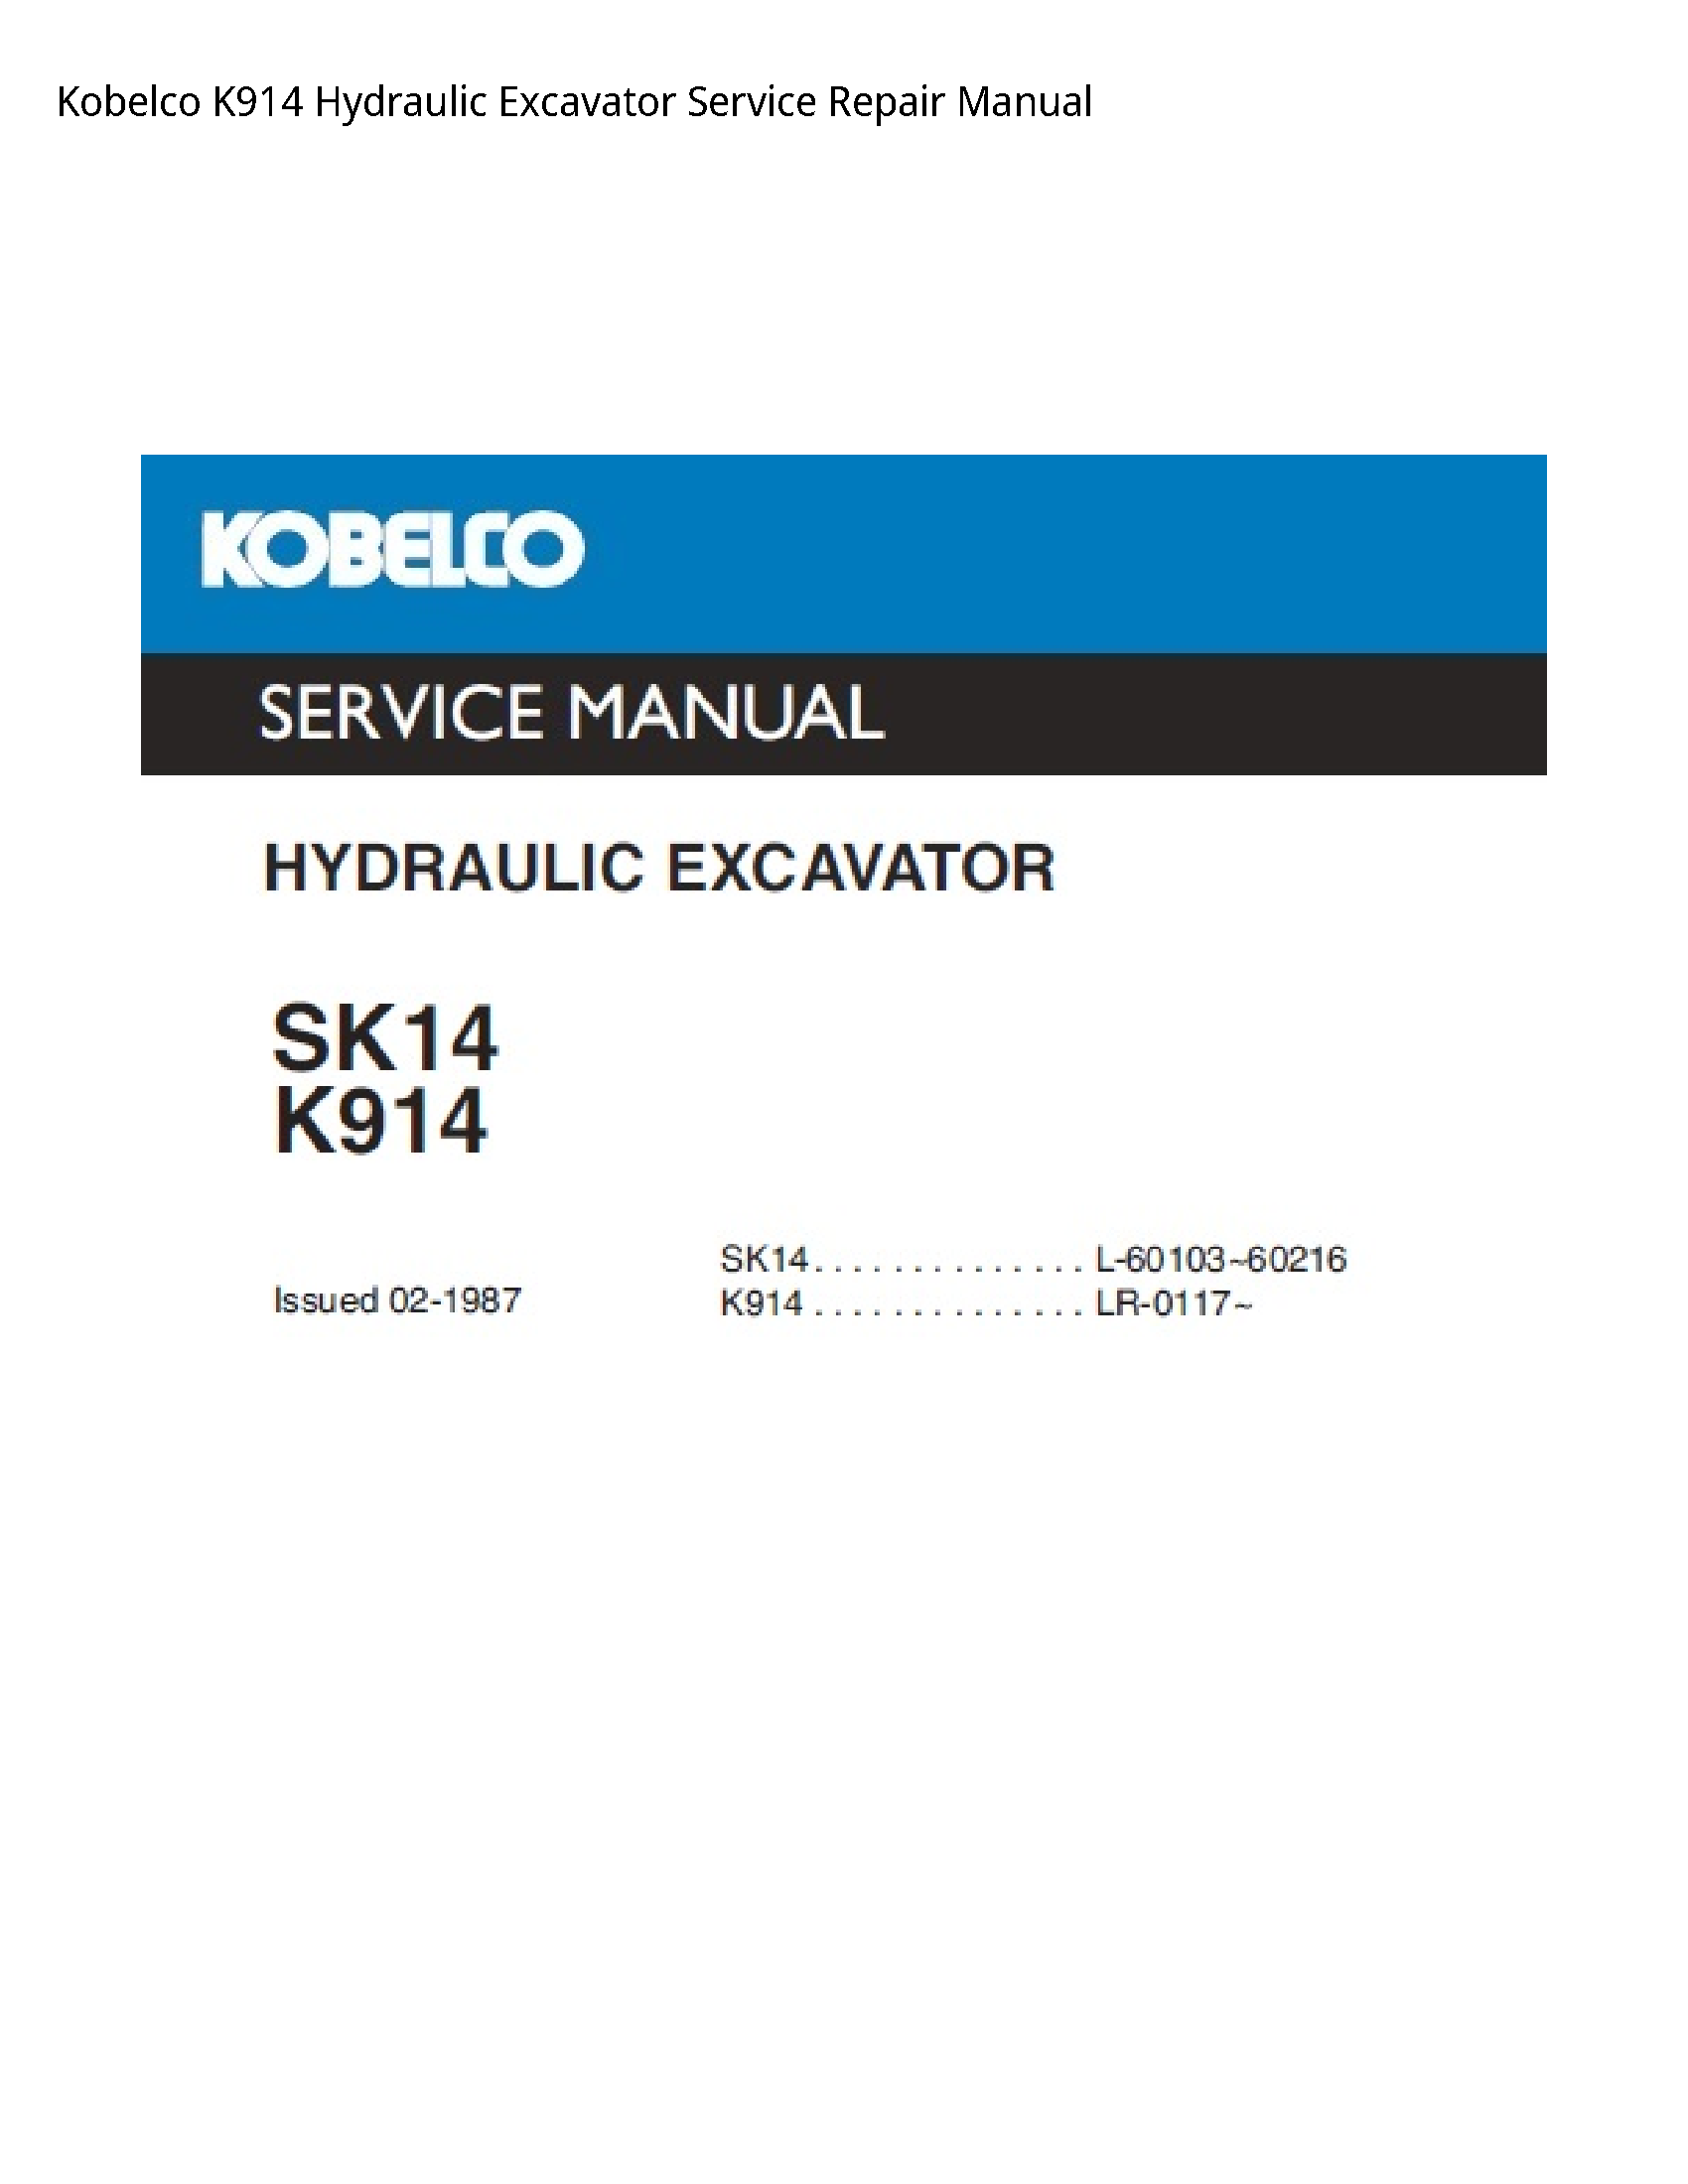 Kobelco K914 Hydraulic Excavator manual